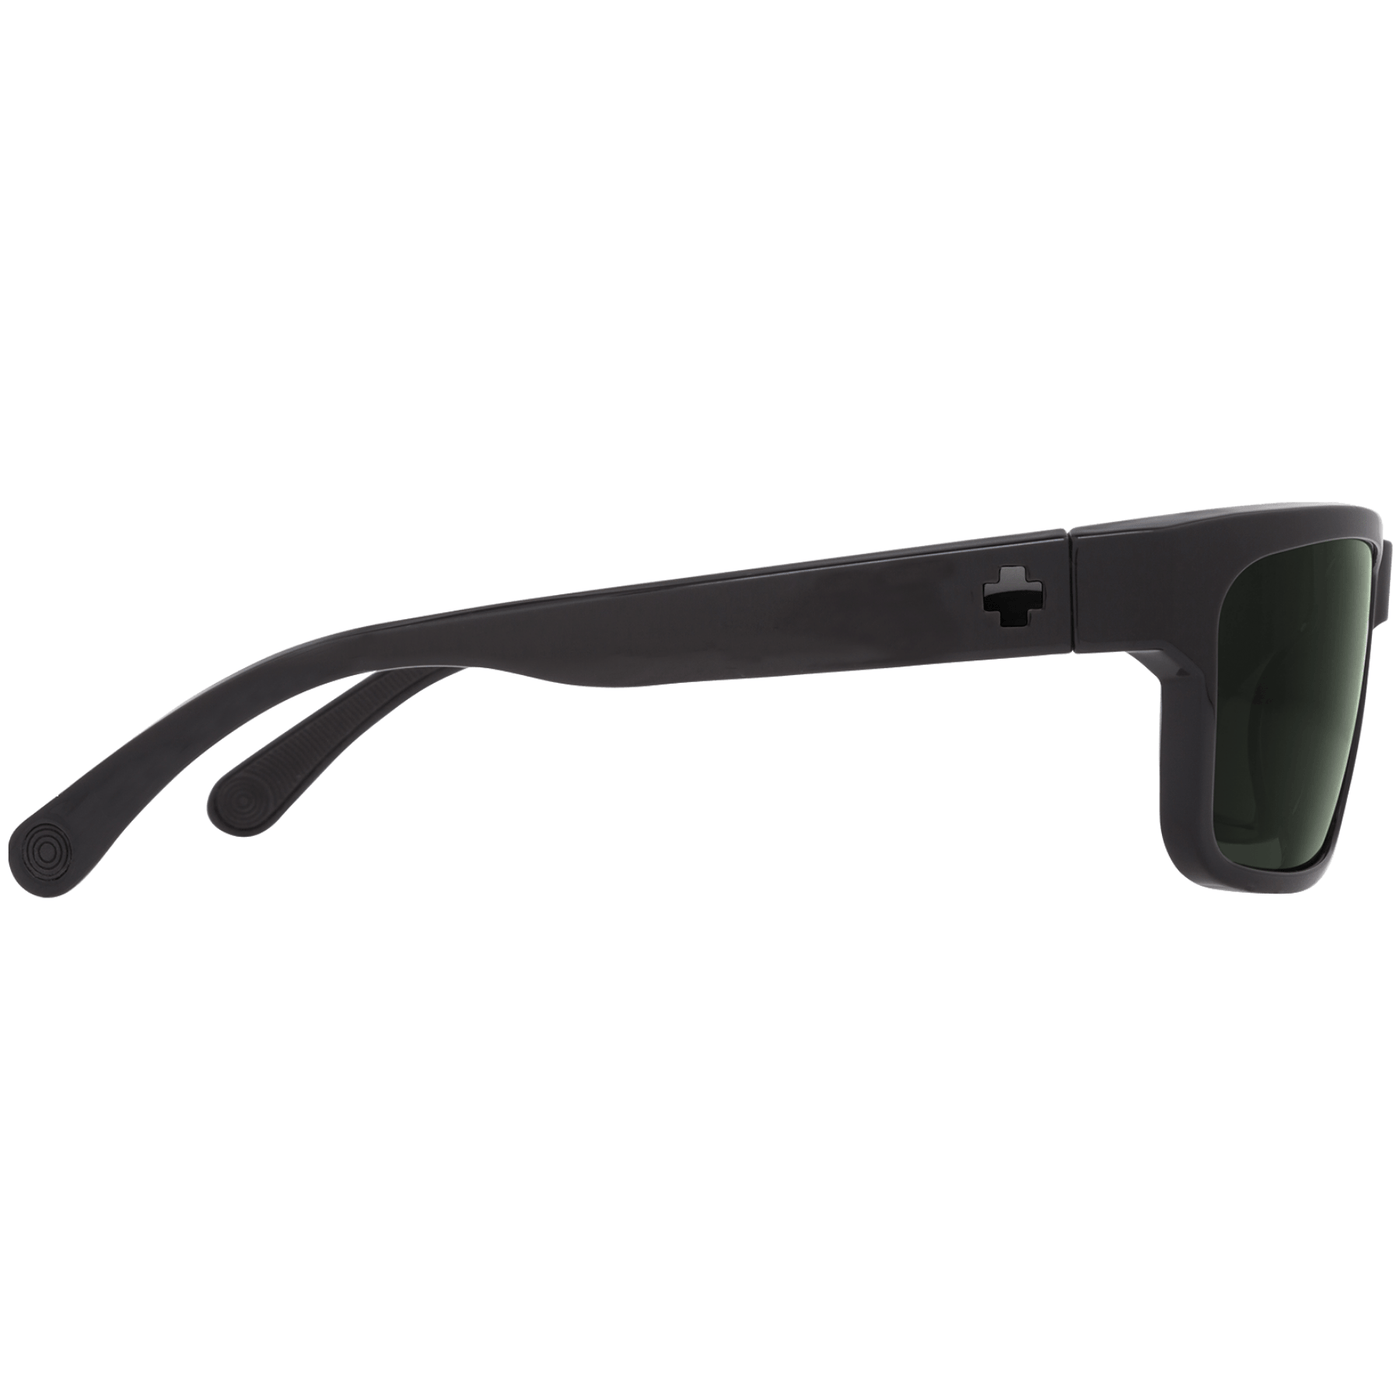 SPY FRAZIER SOSI Sunglasses - Black 8Lines Shop - Fast Shipping